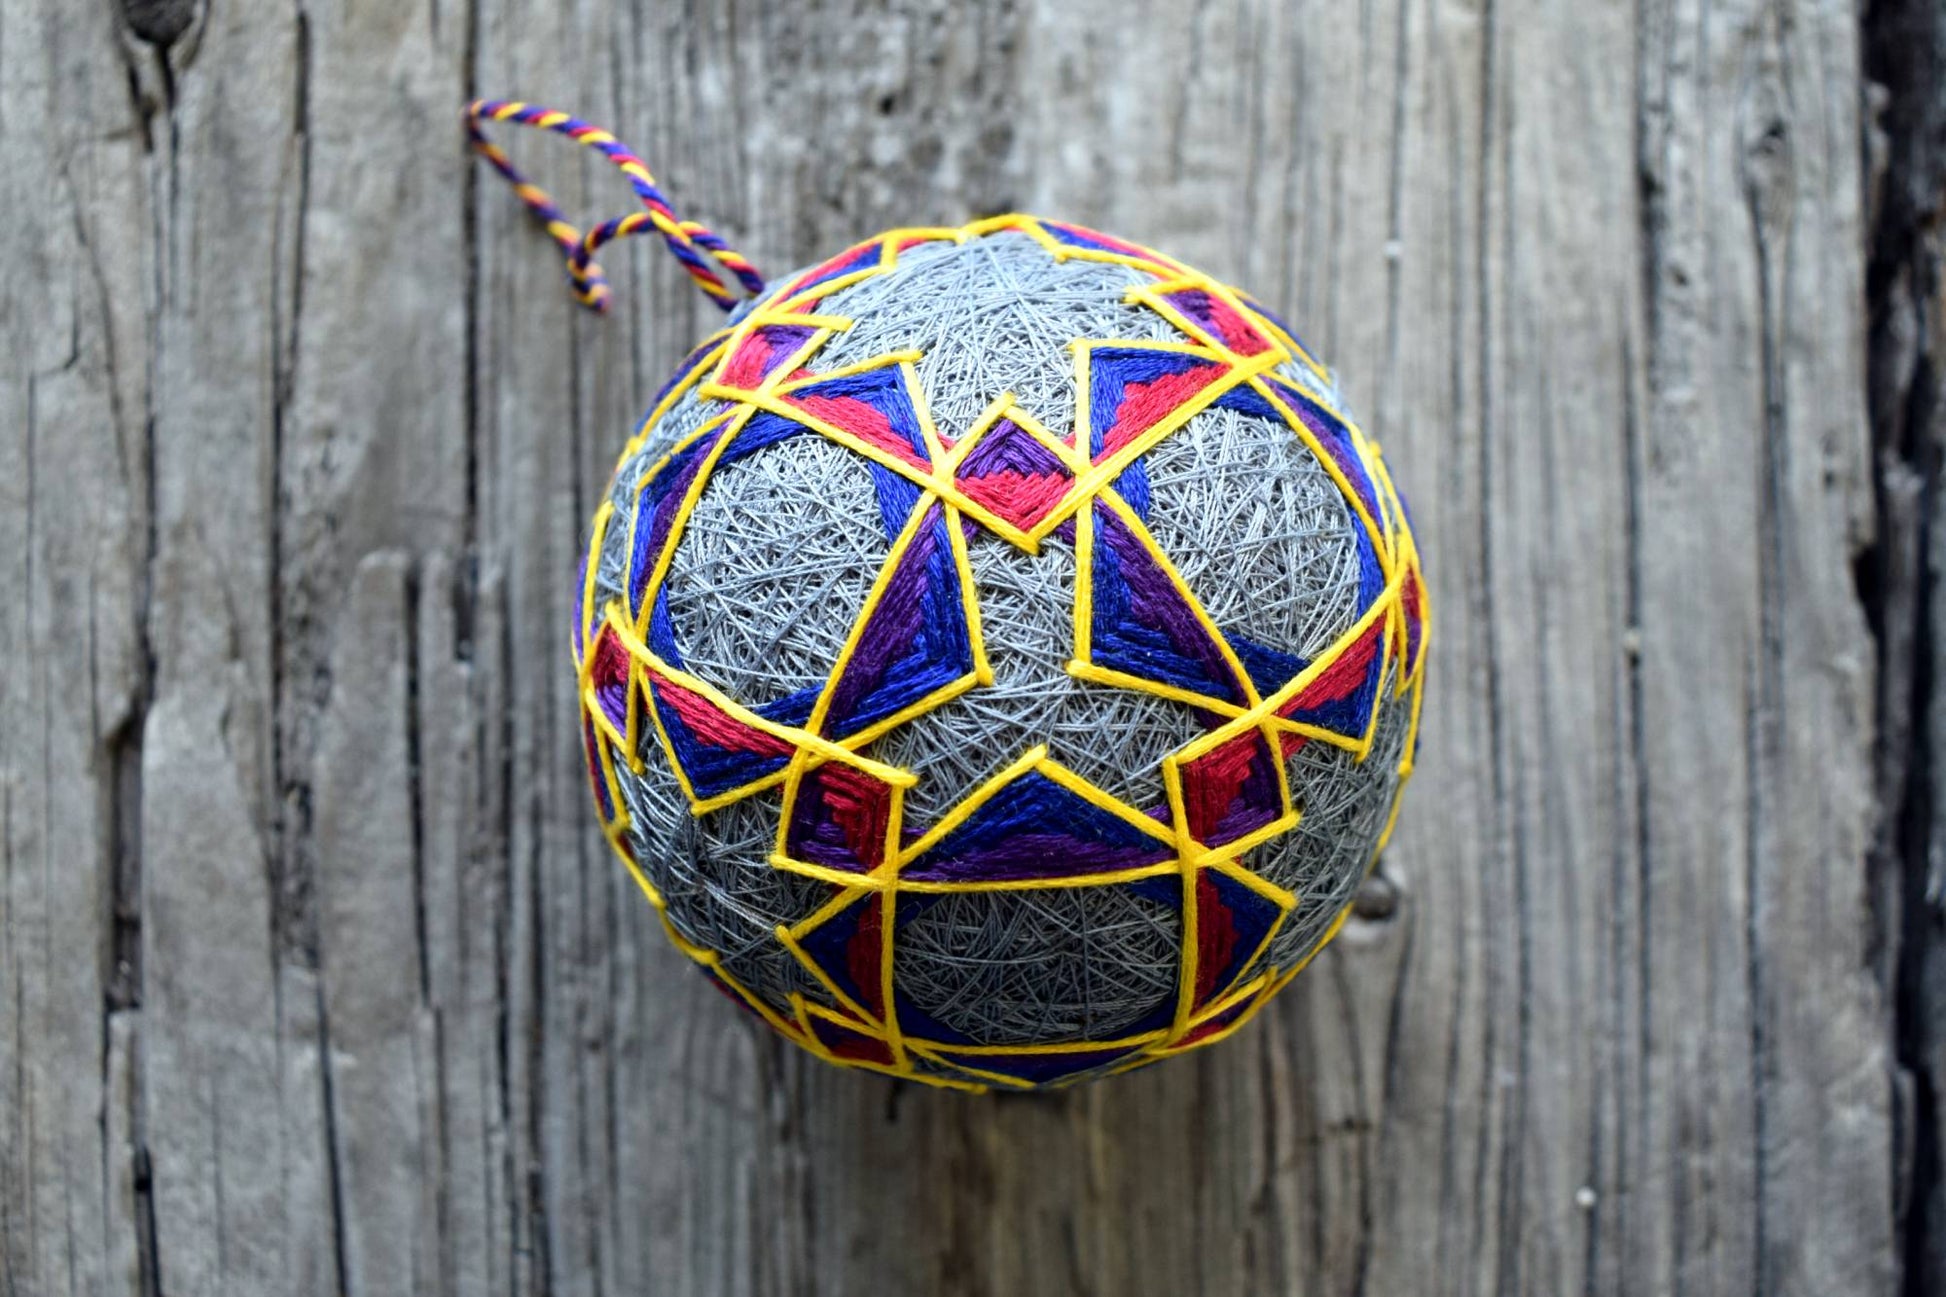 Closeup of Japanese temari ball in red, purple, blue, yellow on grey background. Design of interlocking shapes.